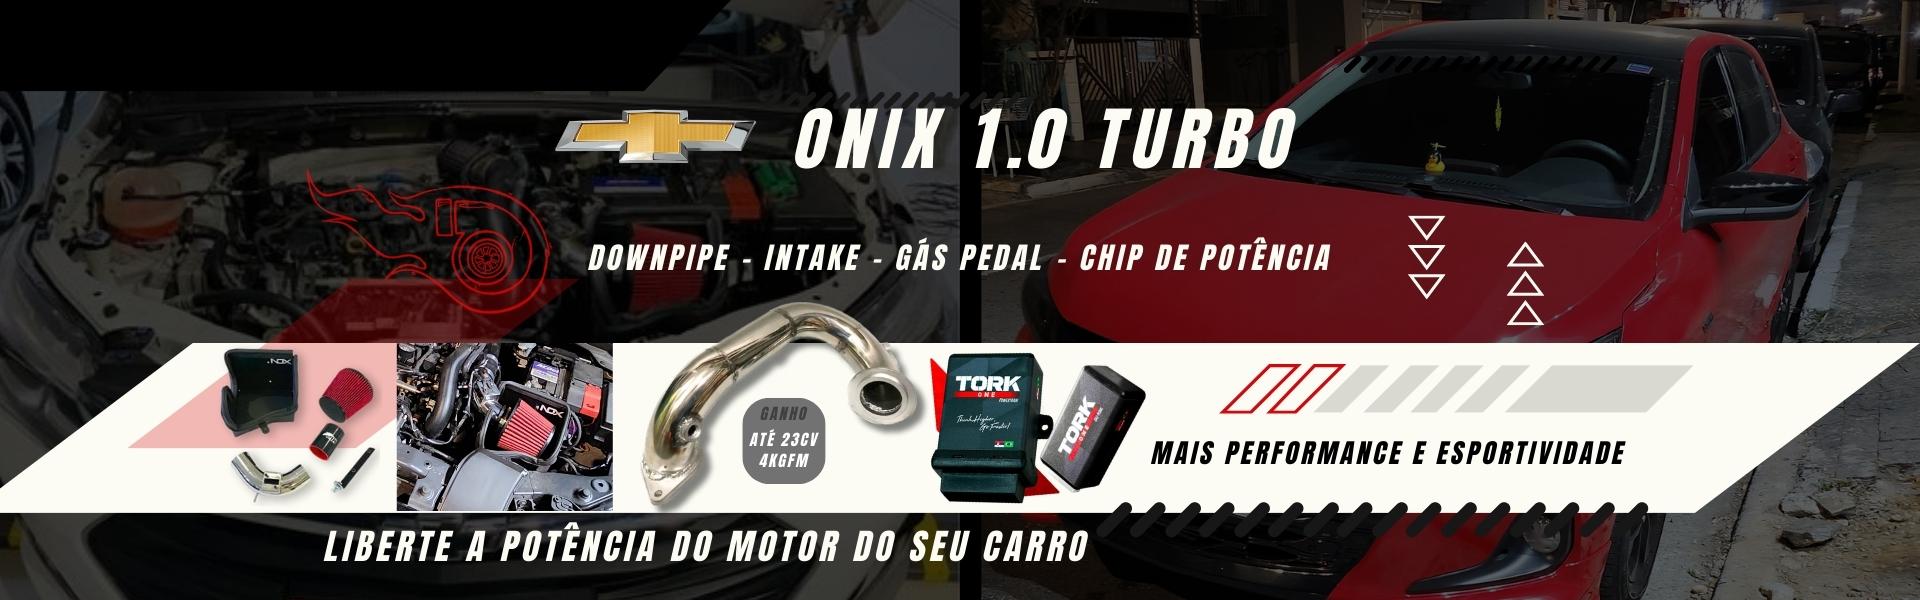 Onix Turbo